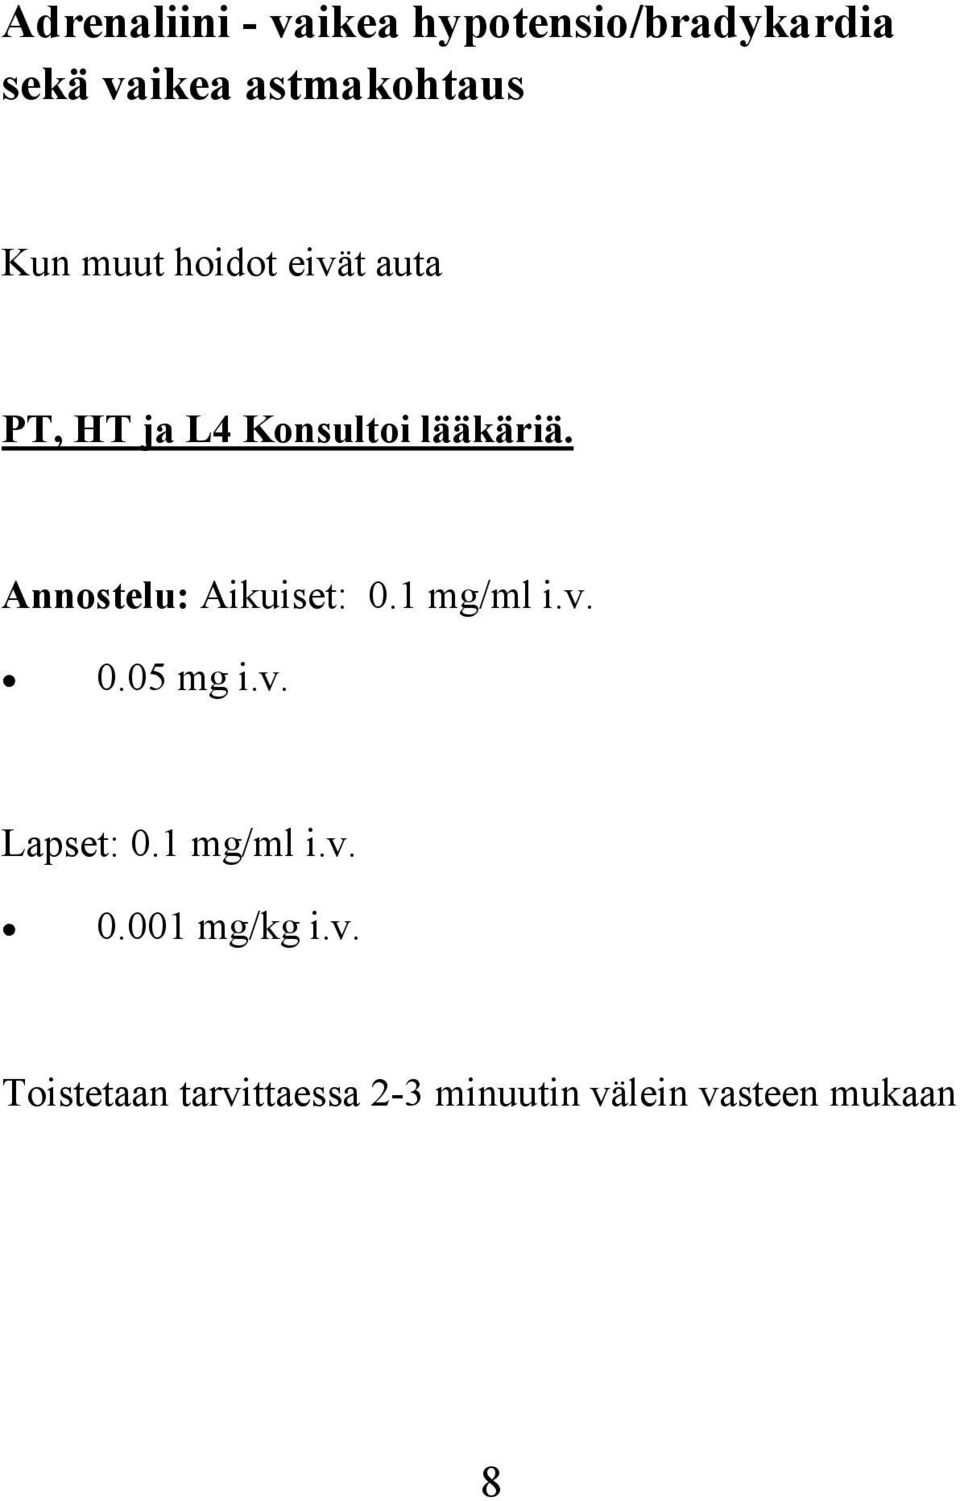 Annostelu: Aikuiset: 0.1 mg/ml i.v. 0.05 mg i.v. Lapset: 0.1 mg/ml i.v. 0.001 mg/kg i.